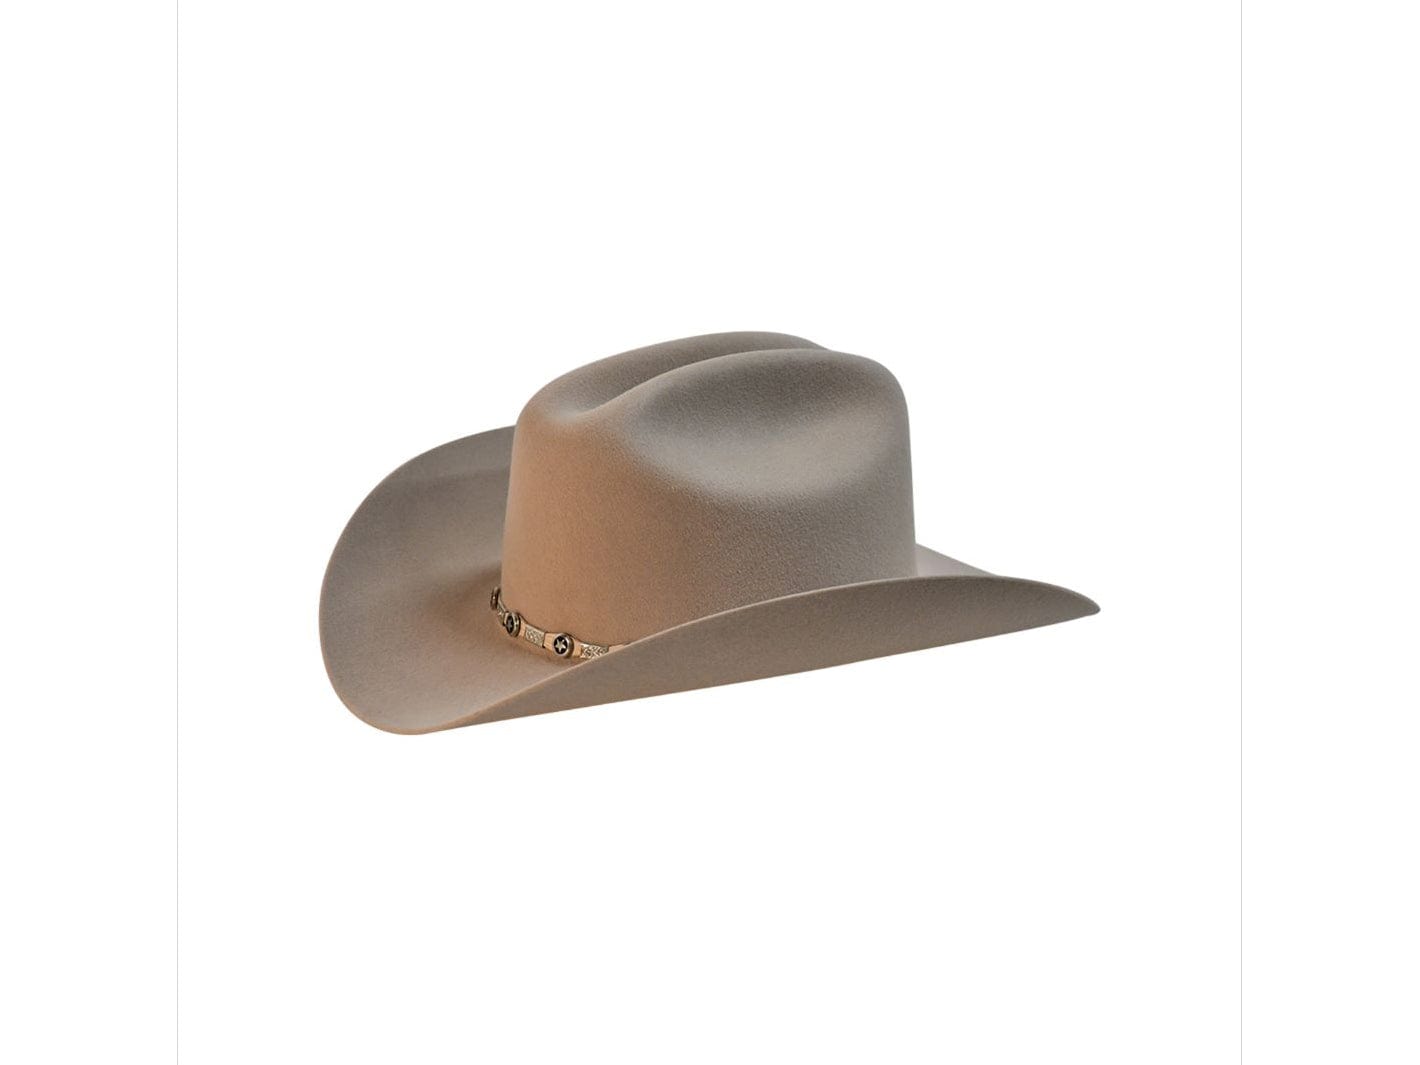 Exclusive "Sinaloa" Texas Country Western Felt Cowboy Hat Tan